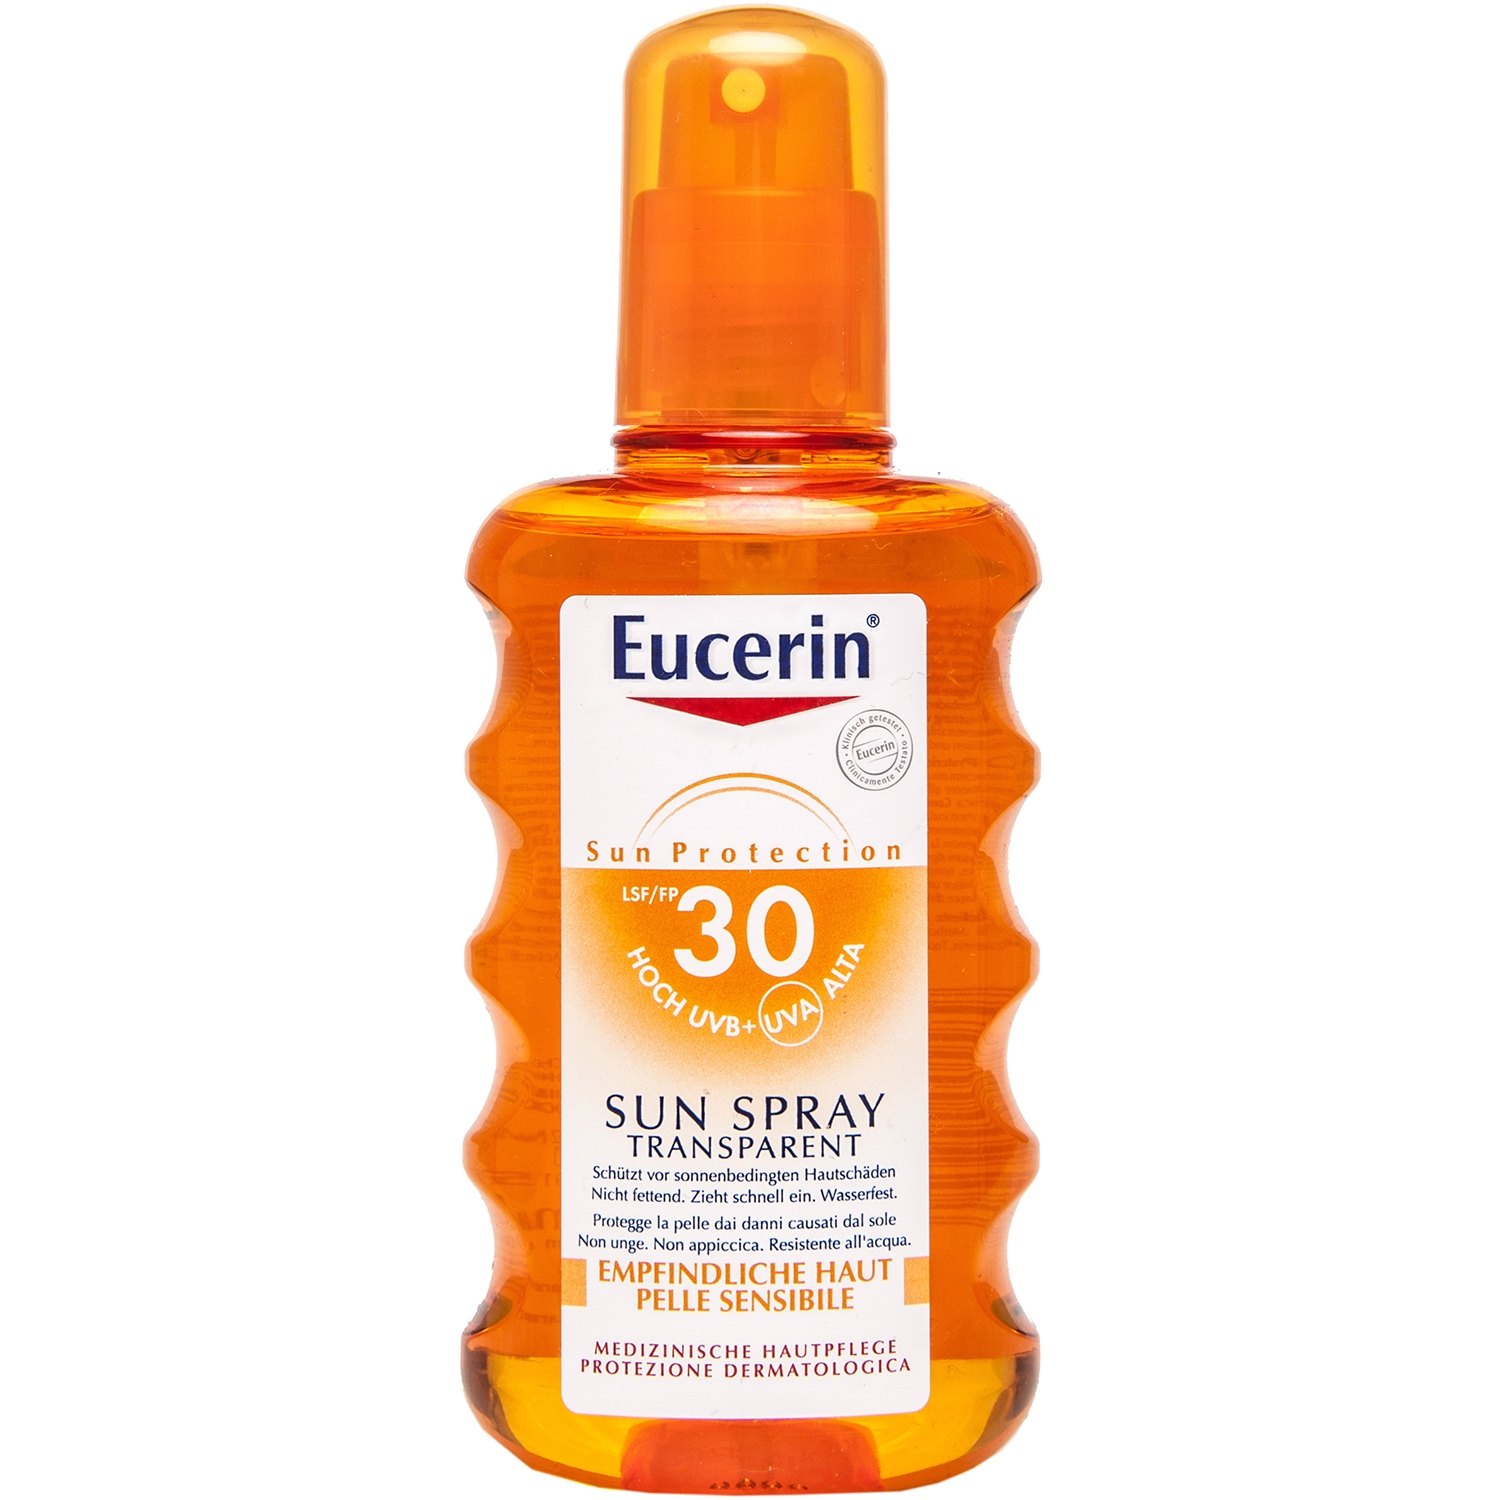 Eucerin sun spray transparant - 200 ml